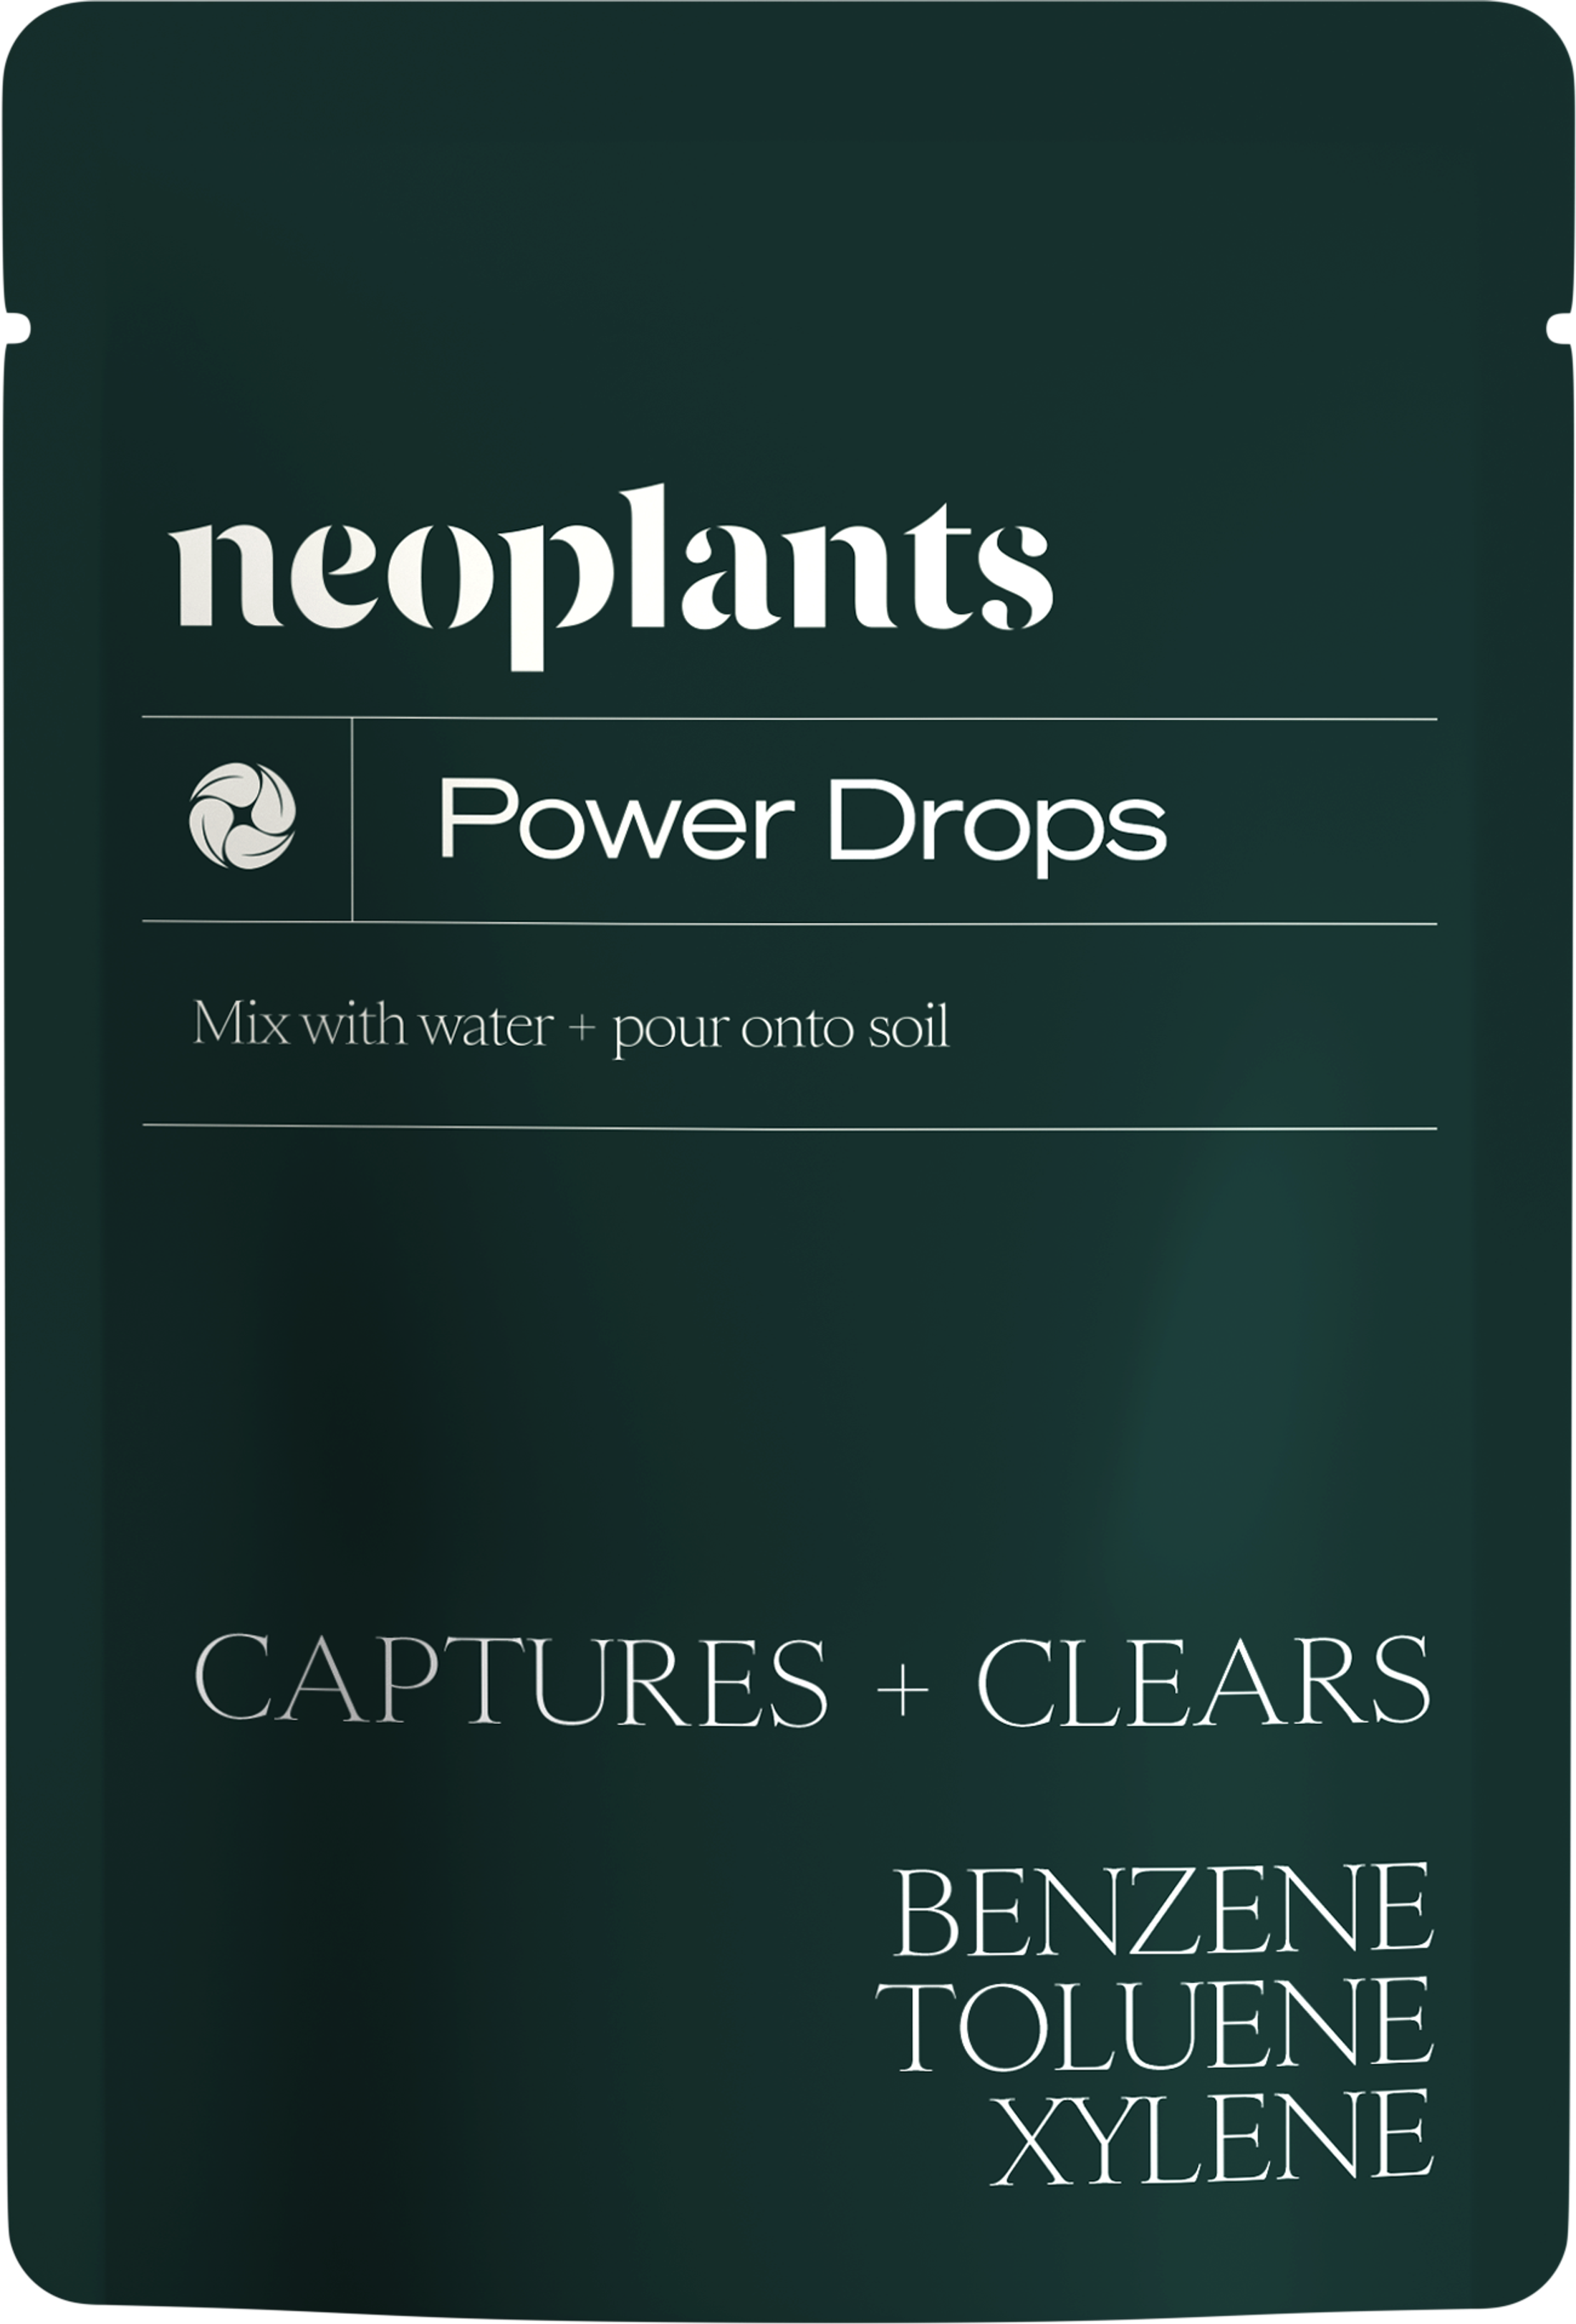 Neoplants Power Drops Package